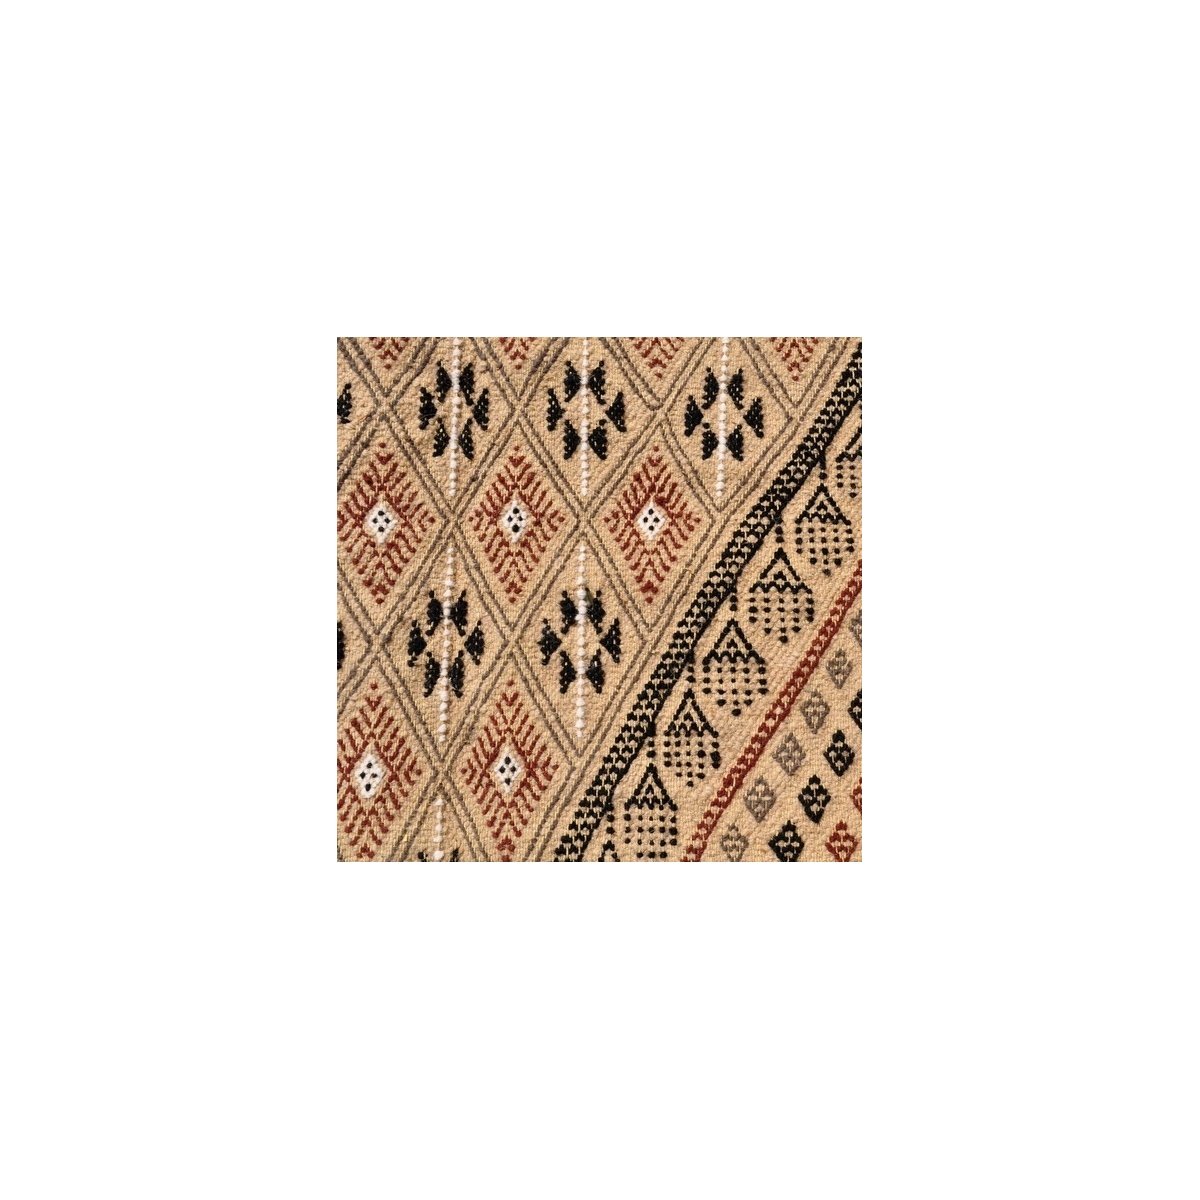 Berber carpet Rug Margoum Bulla regia 110x200 Beige/Brown (Handmade, Wool) Tunisian margoum rug from the city of Kairouan. Recta